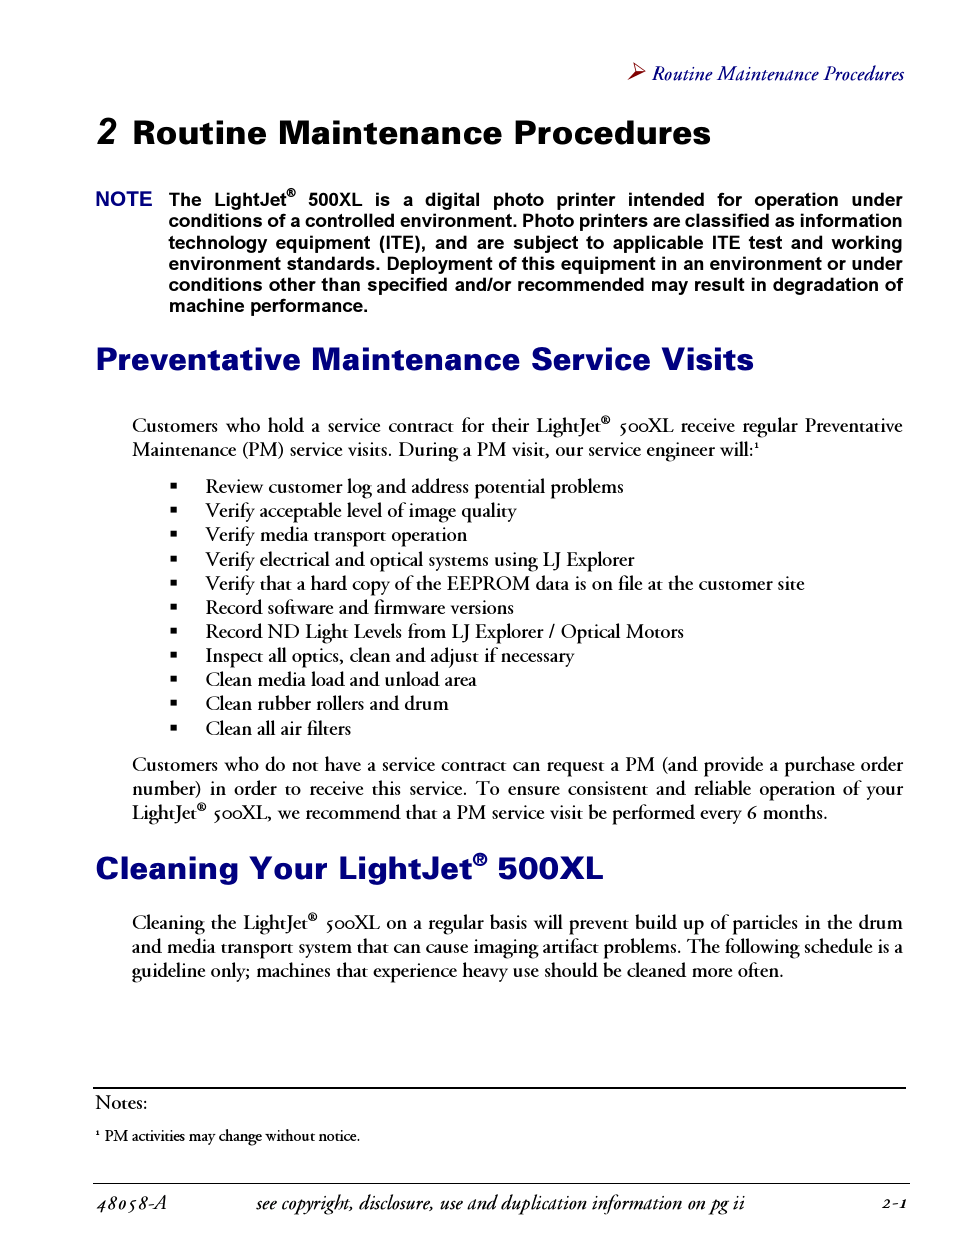 Oce North America Logo - routine maintenance procedures - 500xl - Routine maintenance